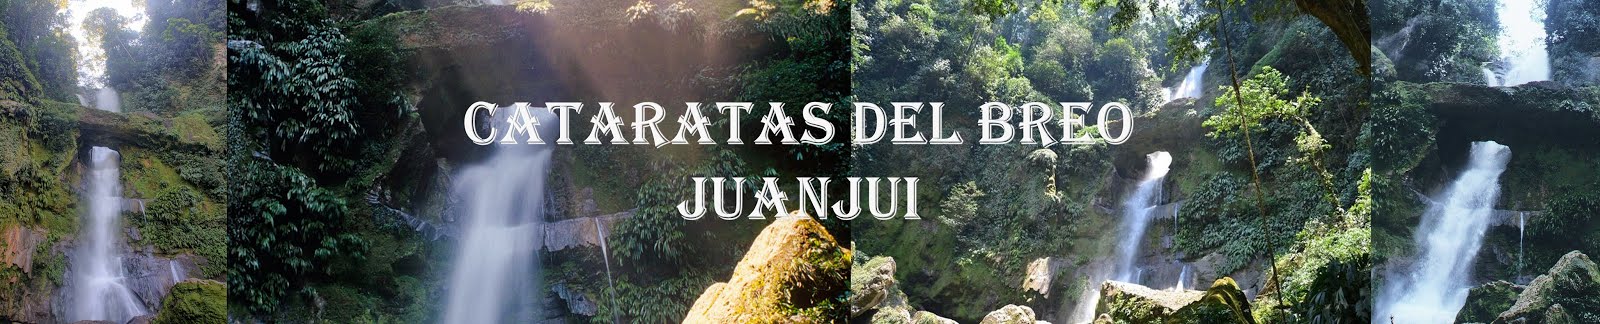 Cataratas del Breo - Juanjui